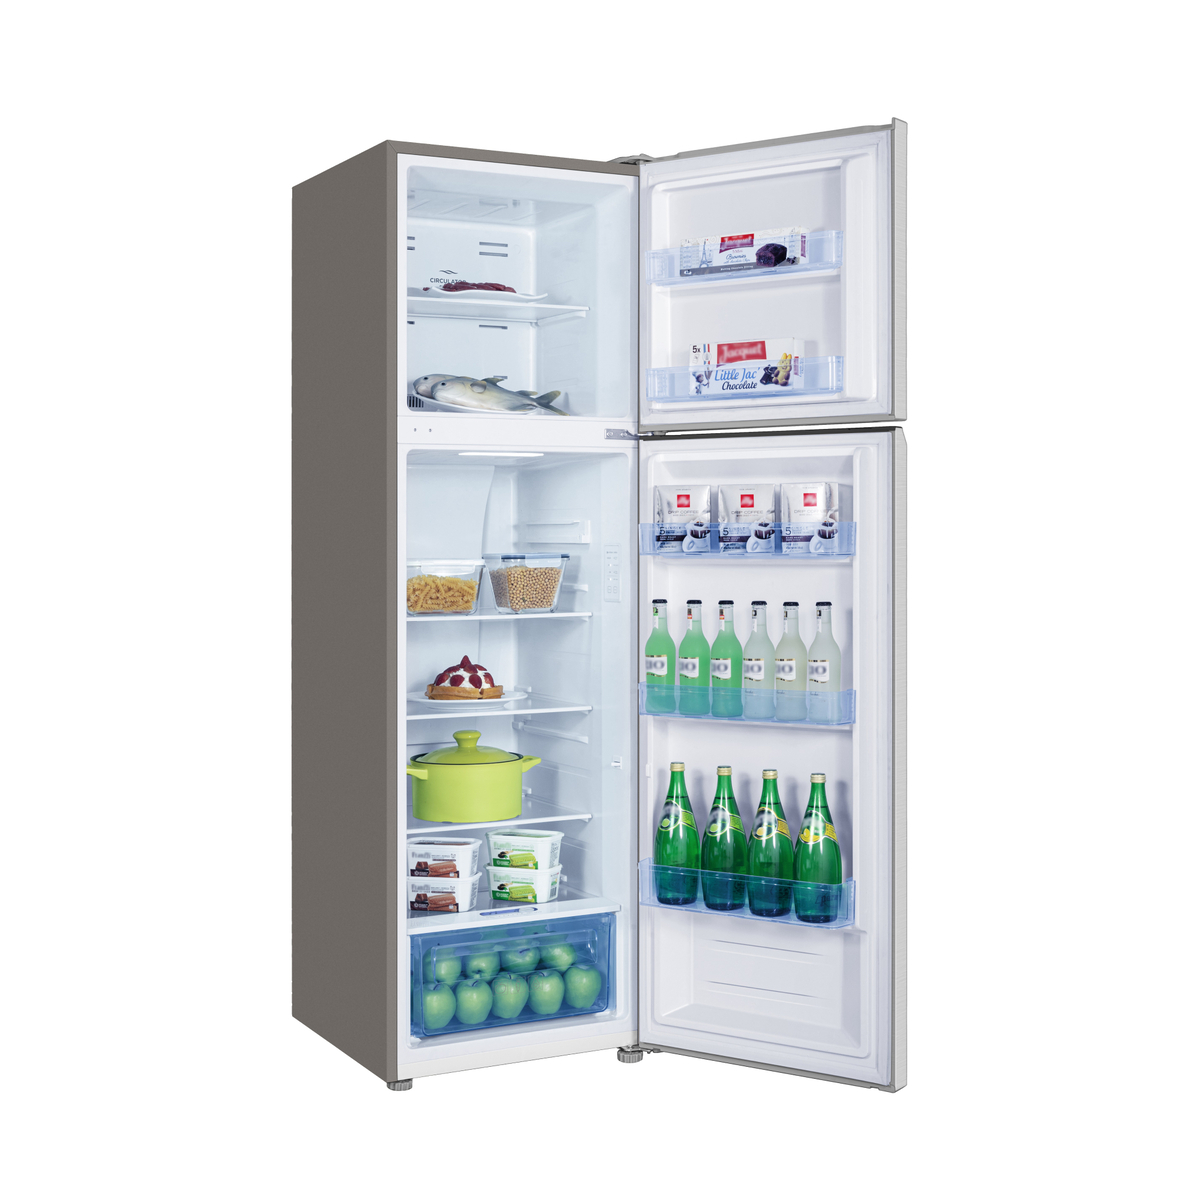 TCL Double Door Refrigerator, 286 L, Silver, P370TMN